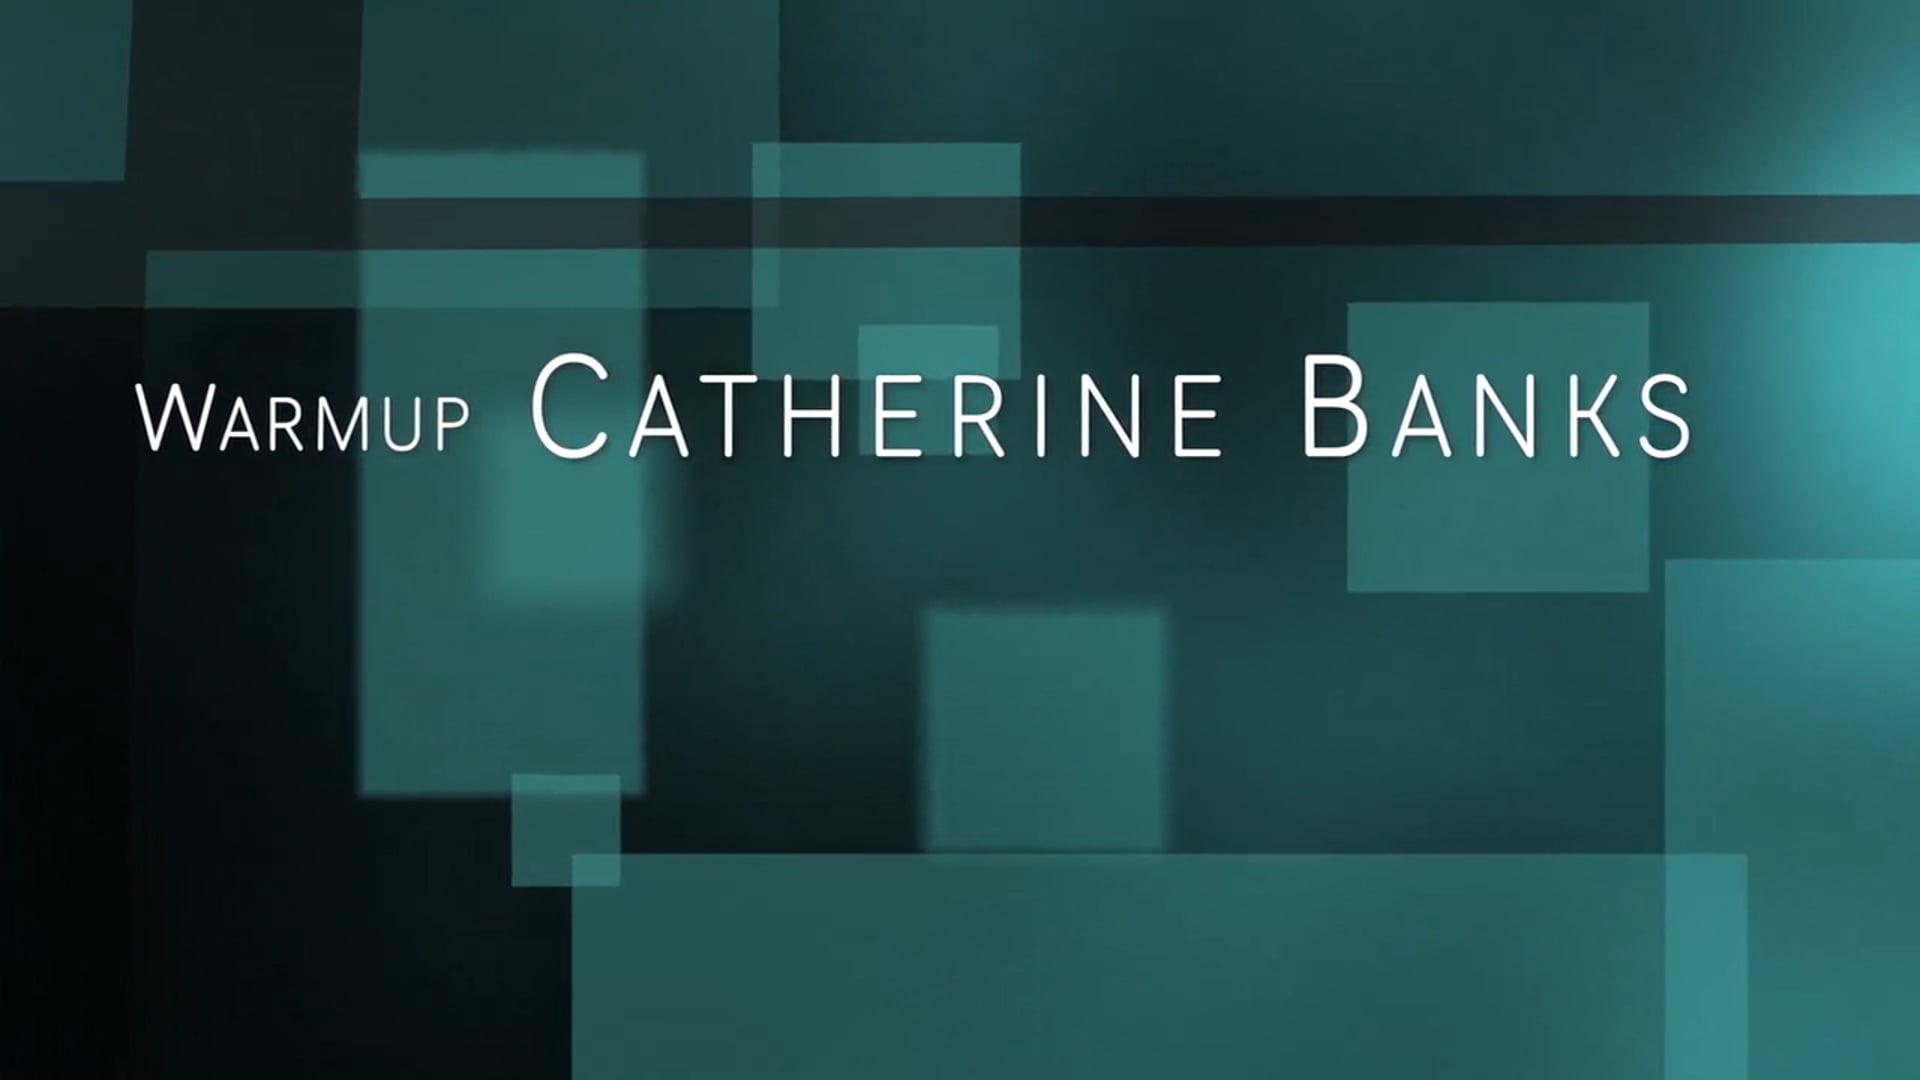 Catherine Banks - Warmup